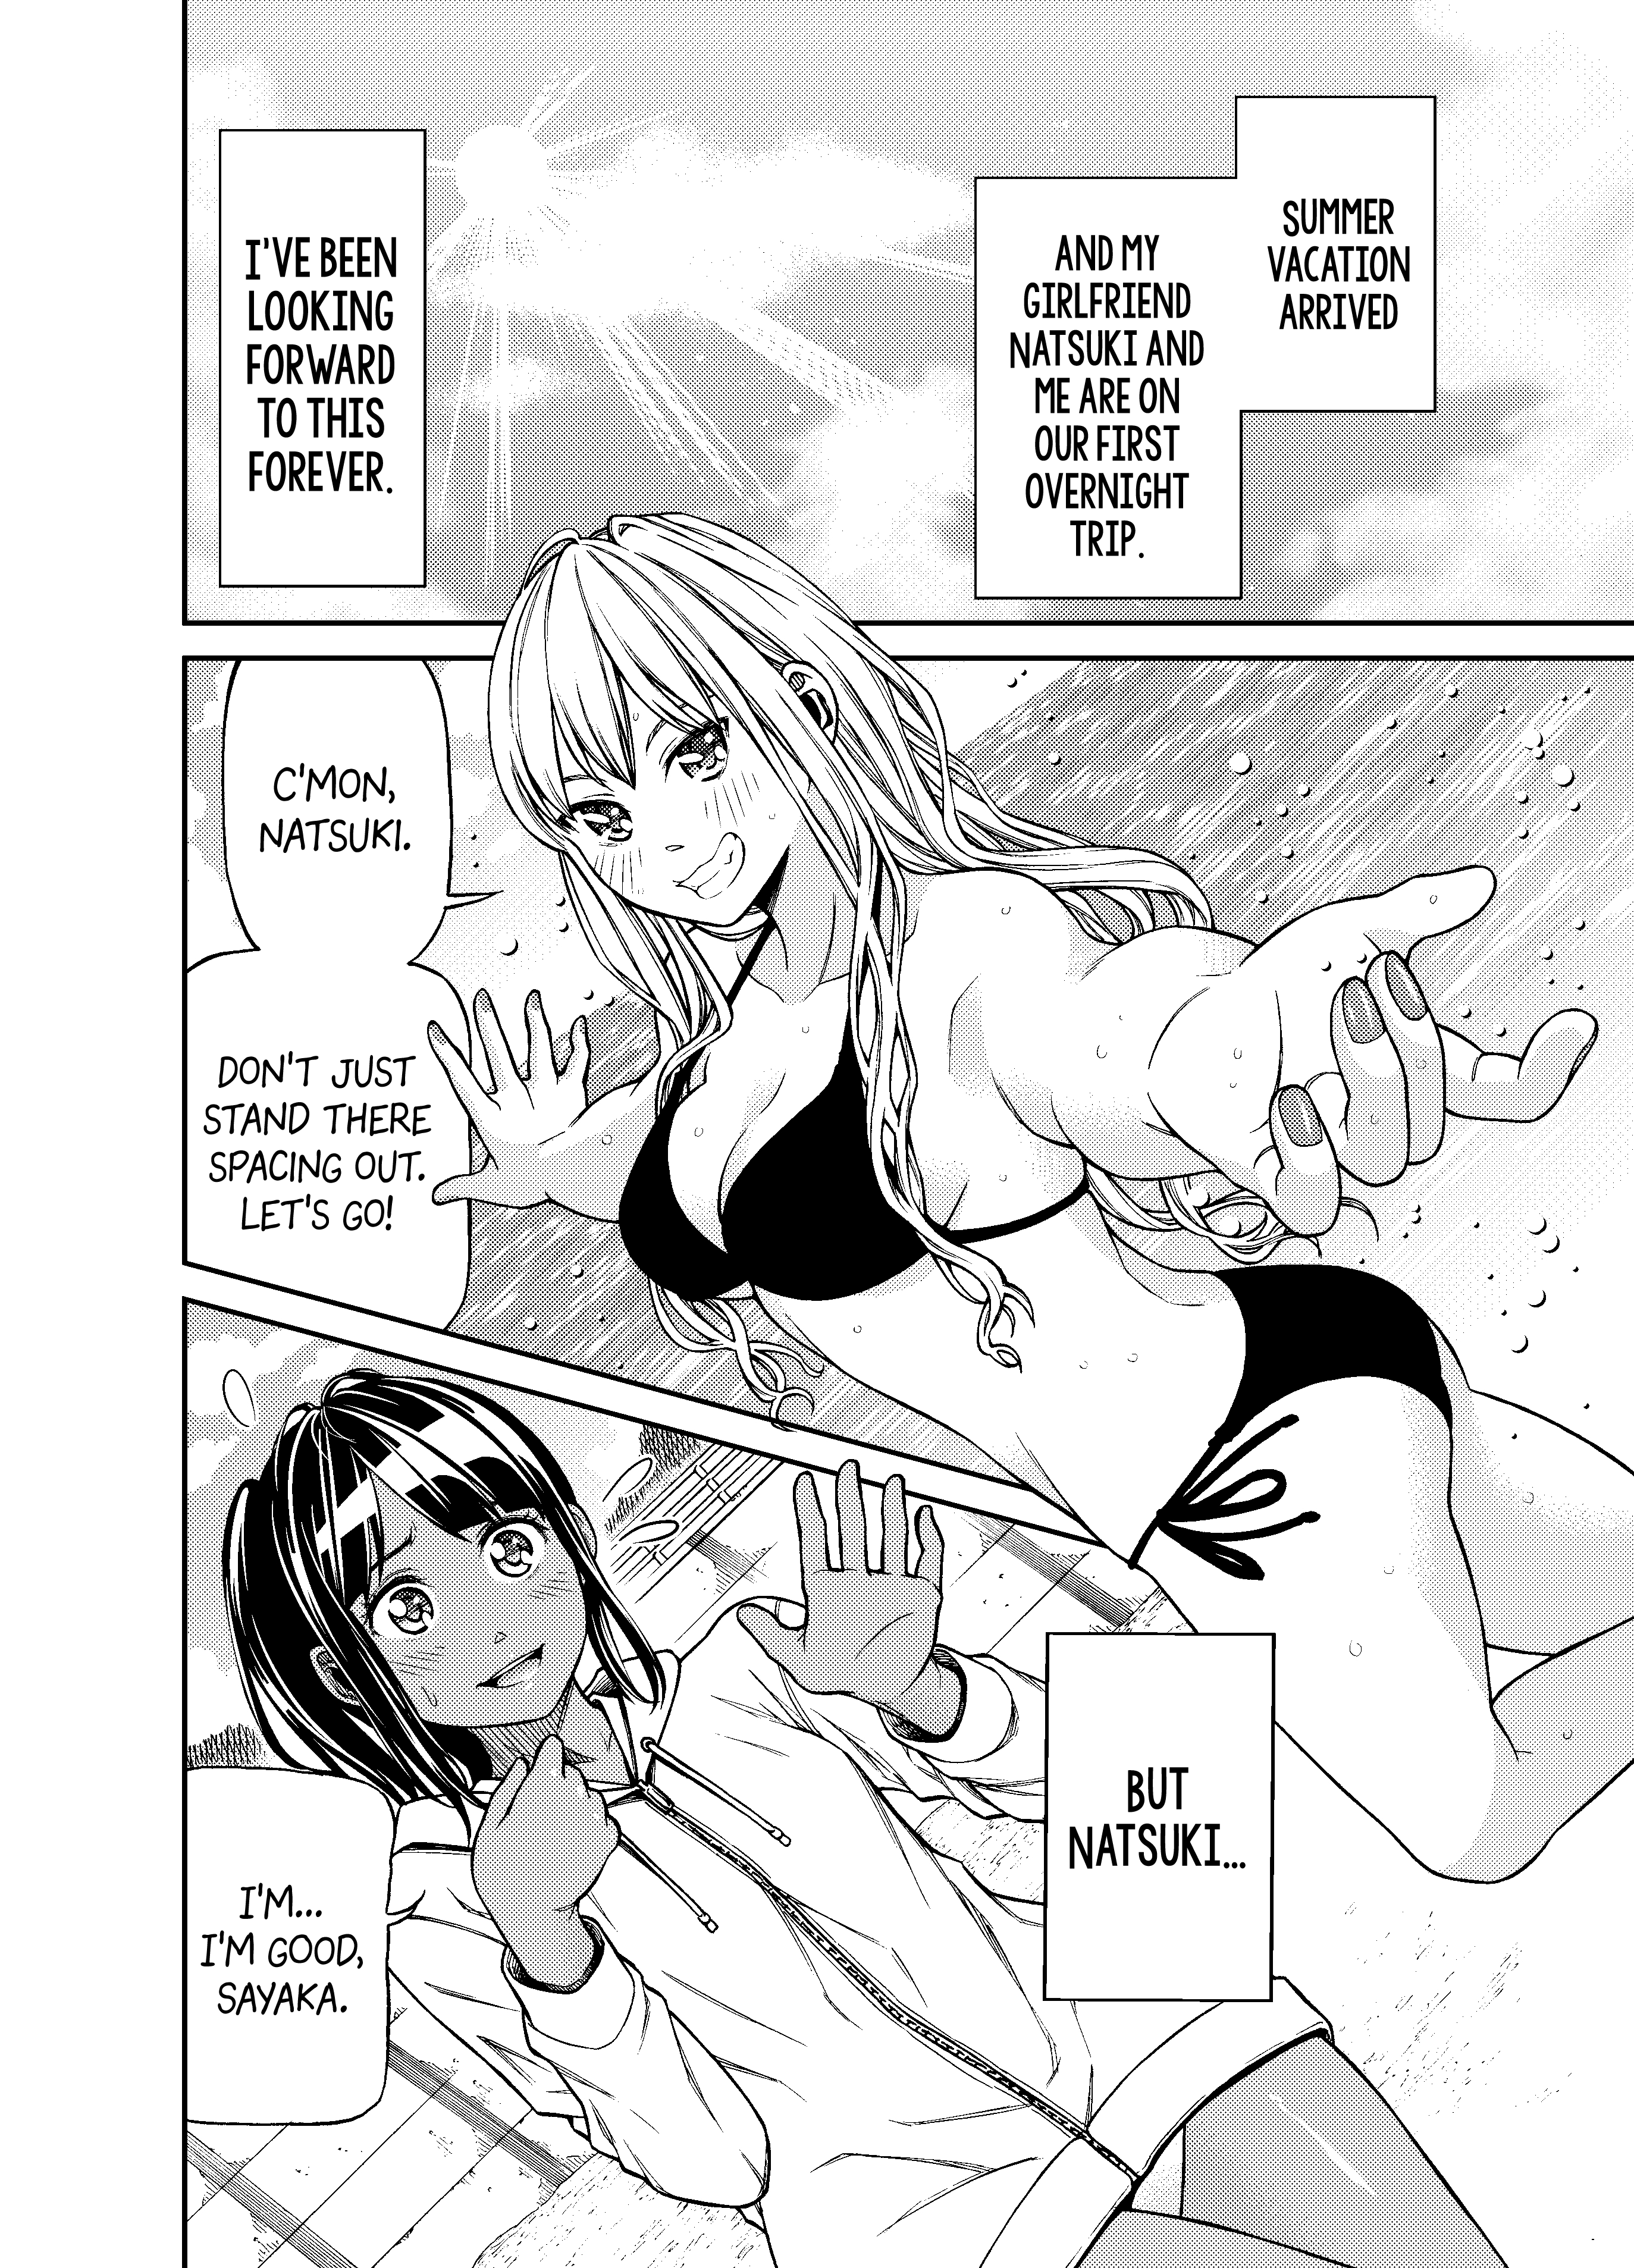 The Marks of Summer manga